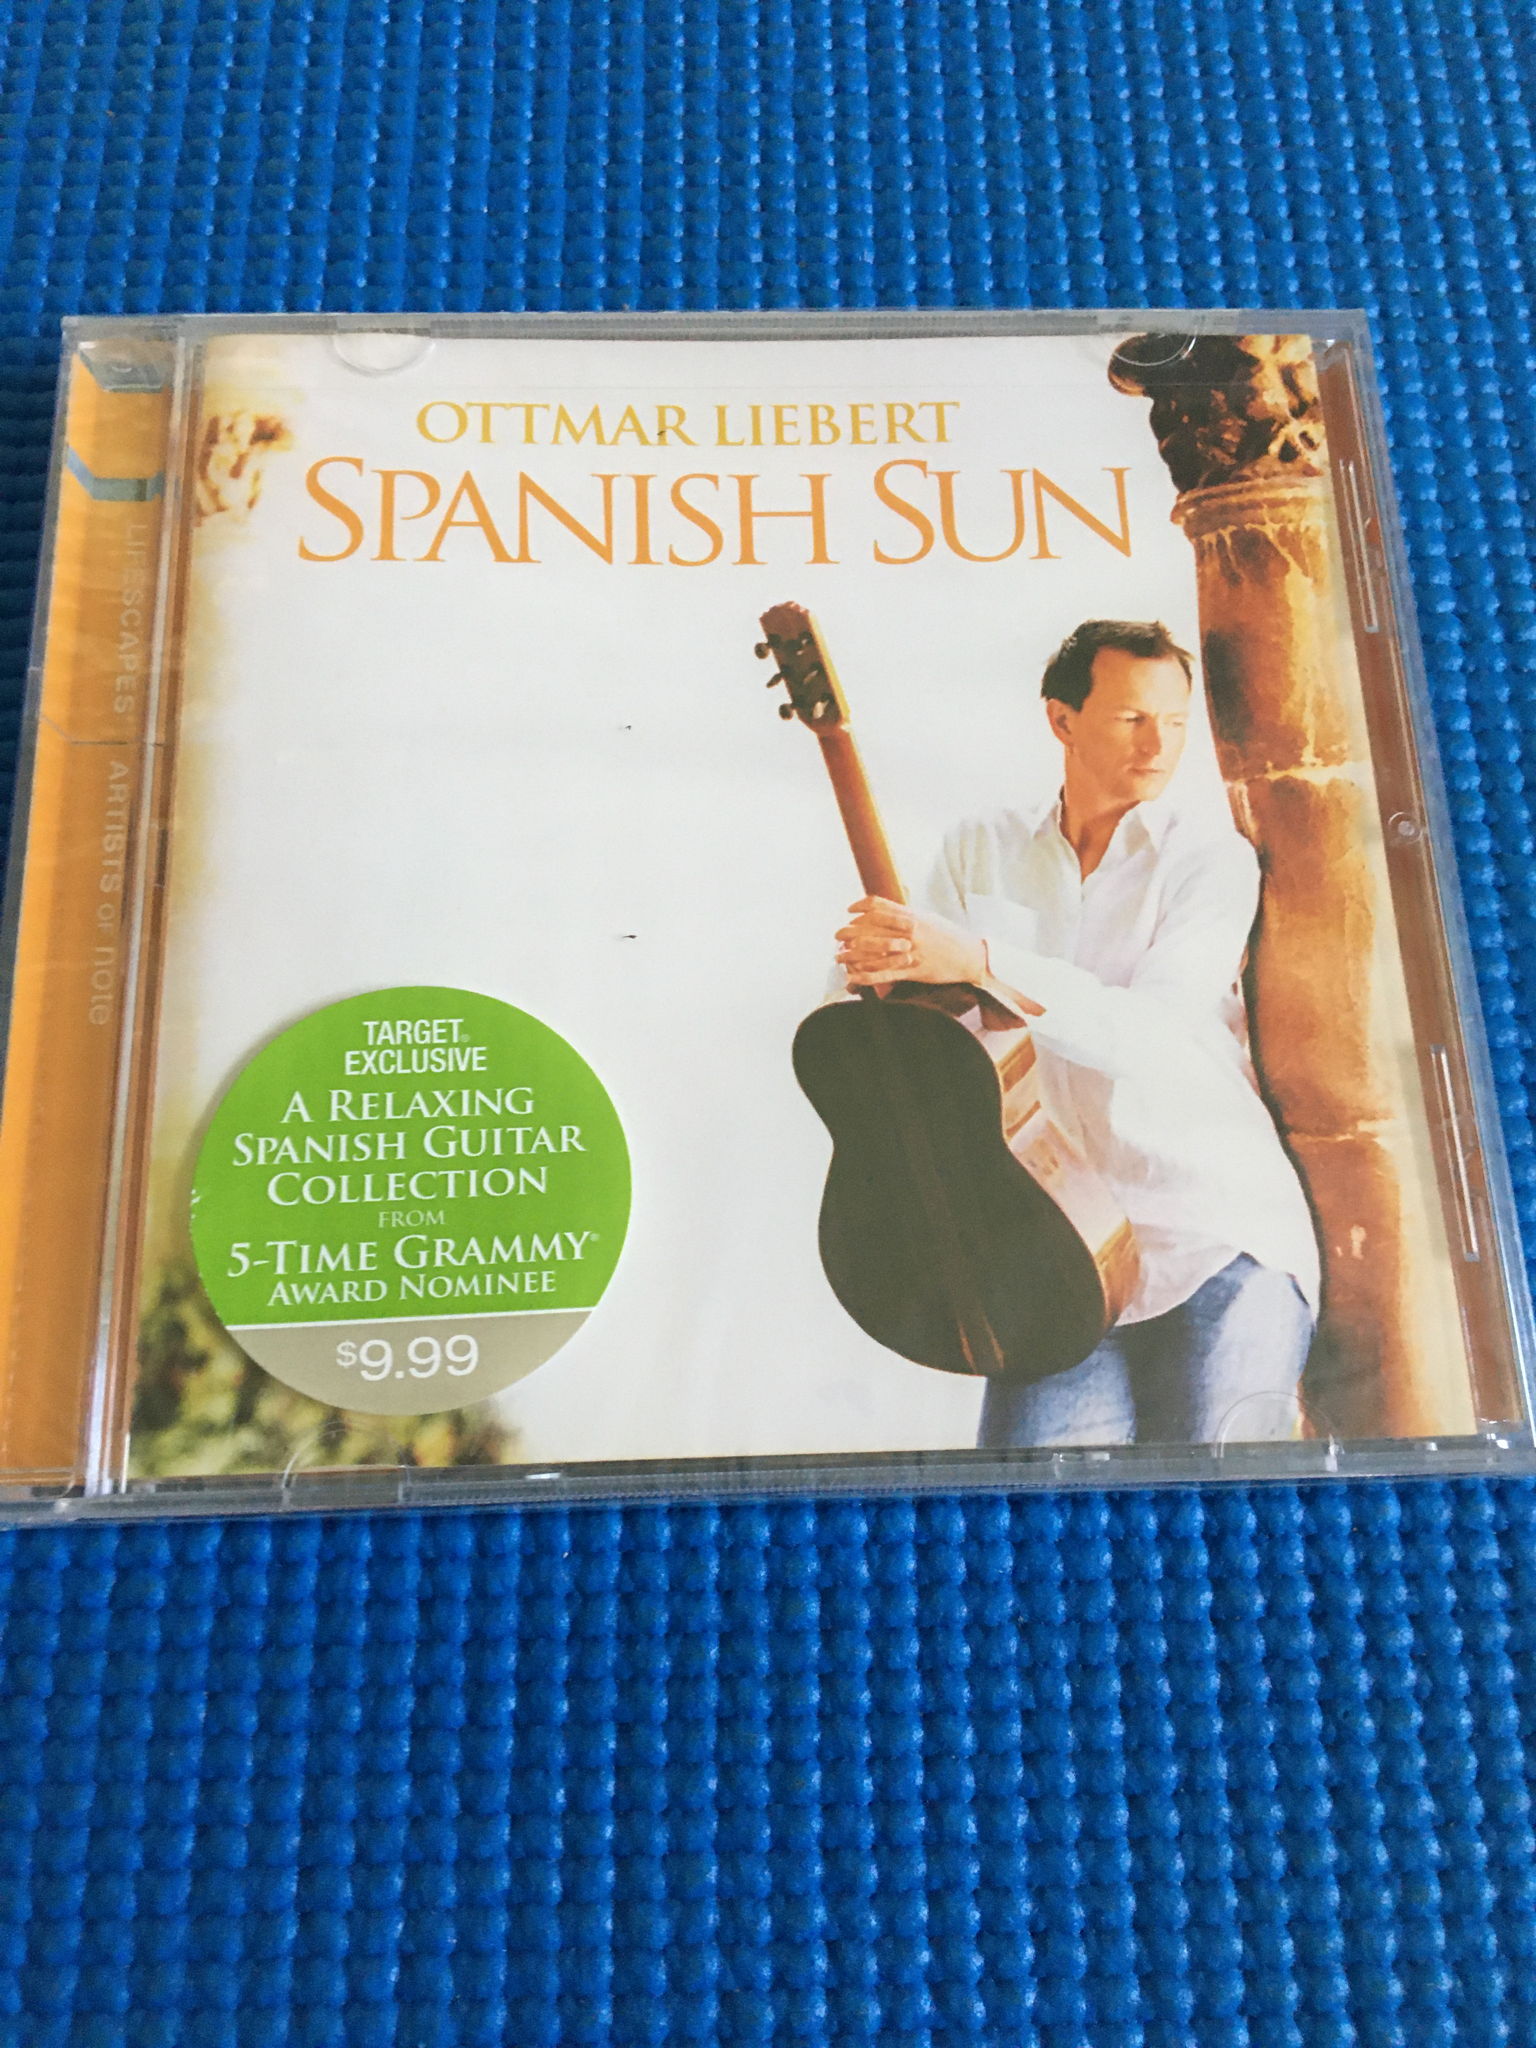 Ottmar Liebert sealed cd Spanish Sun